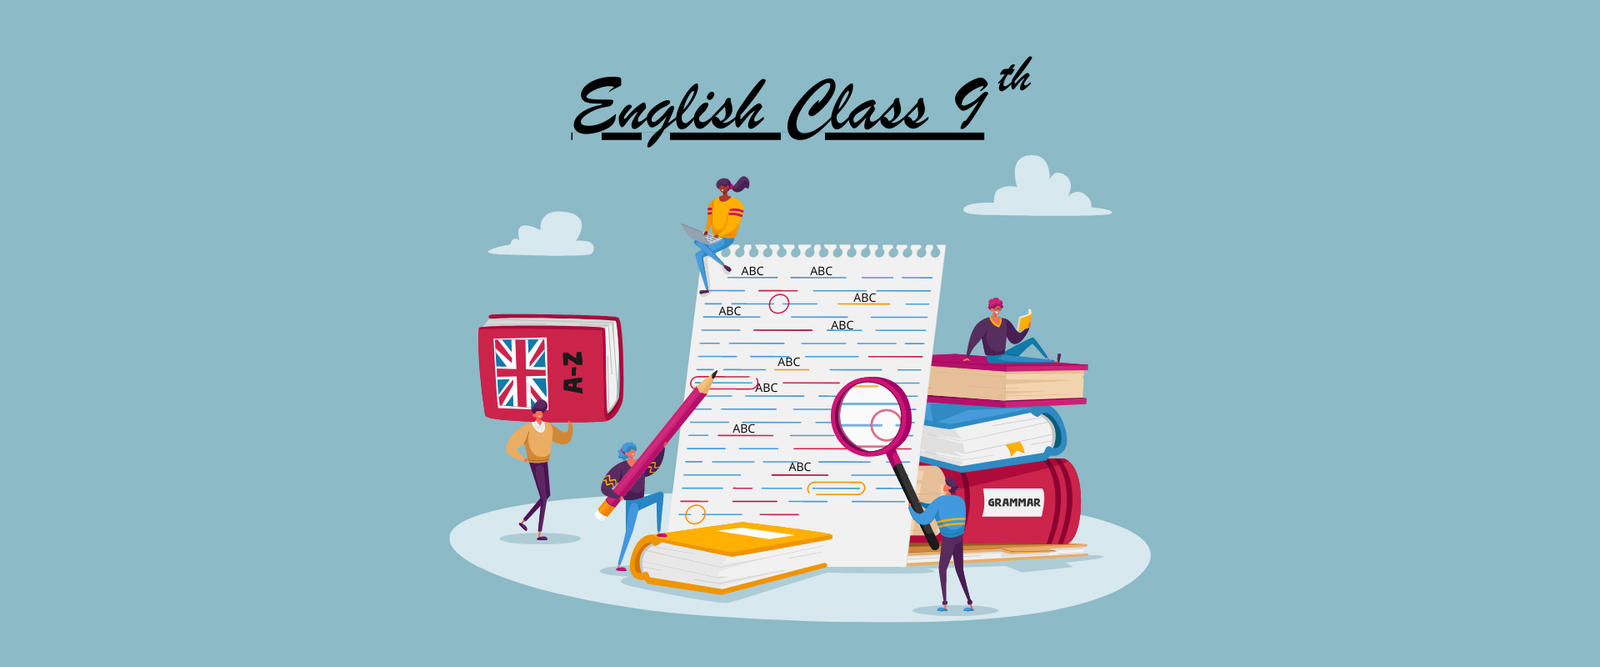 English Class 9